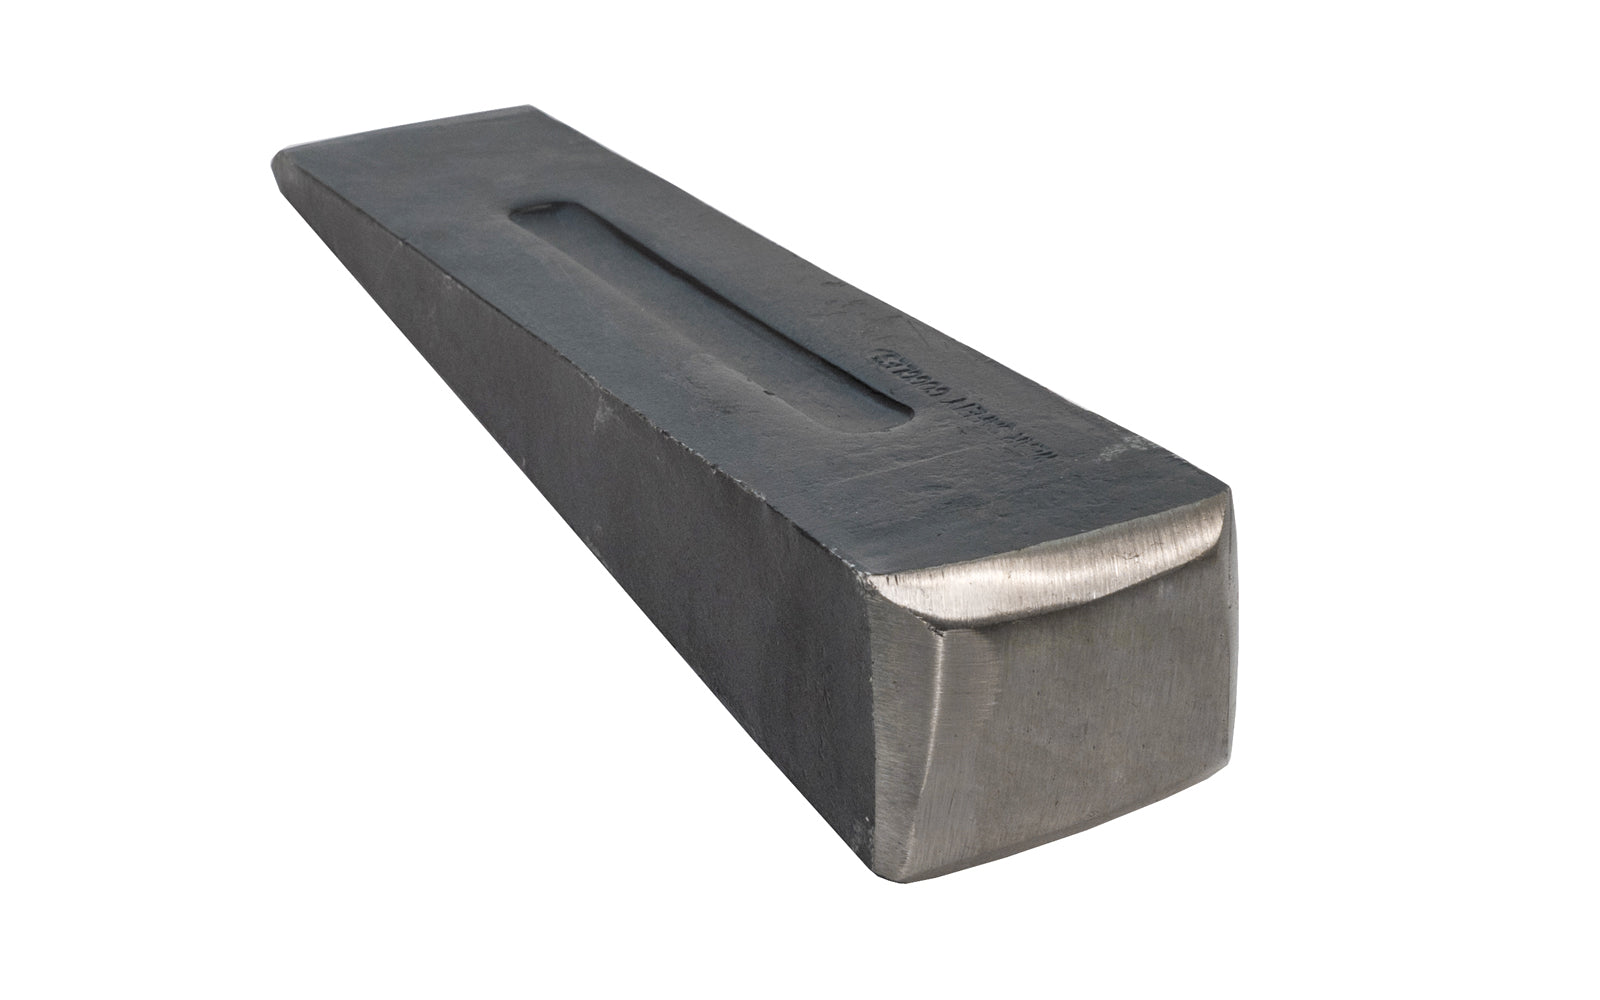  Vaughan Mfg. Model No. SW6X. Basic steel splitting wedge. 6#  steel wedge. 10-1/8" overall length. 6 lbs steel splitting wedge. 093848592790. 2-1/4" wide edge.